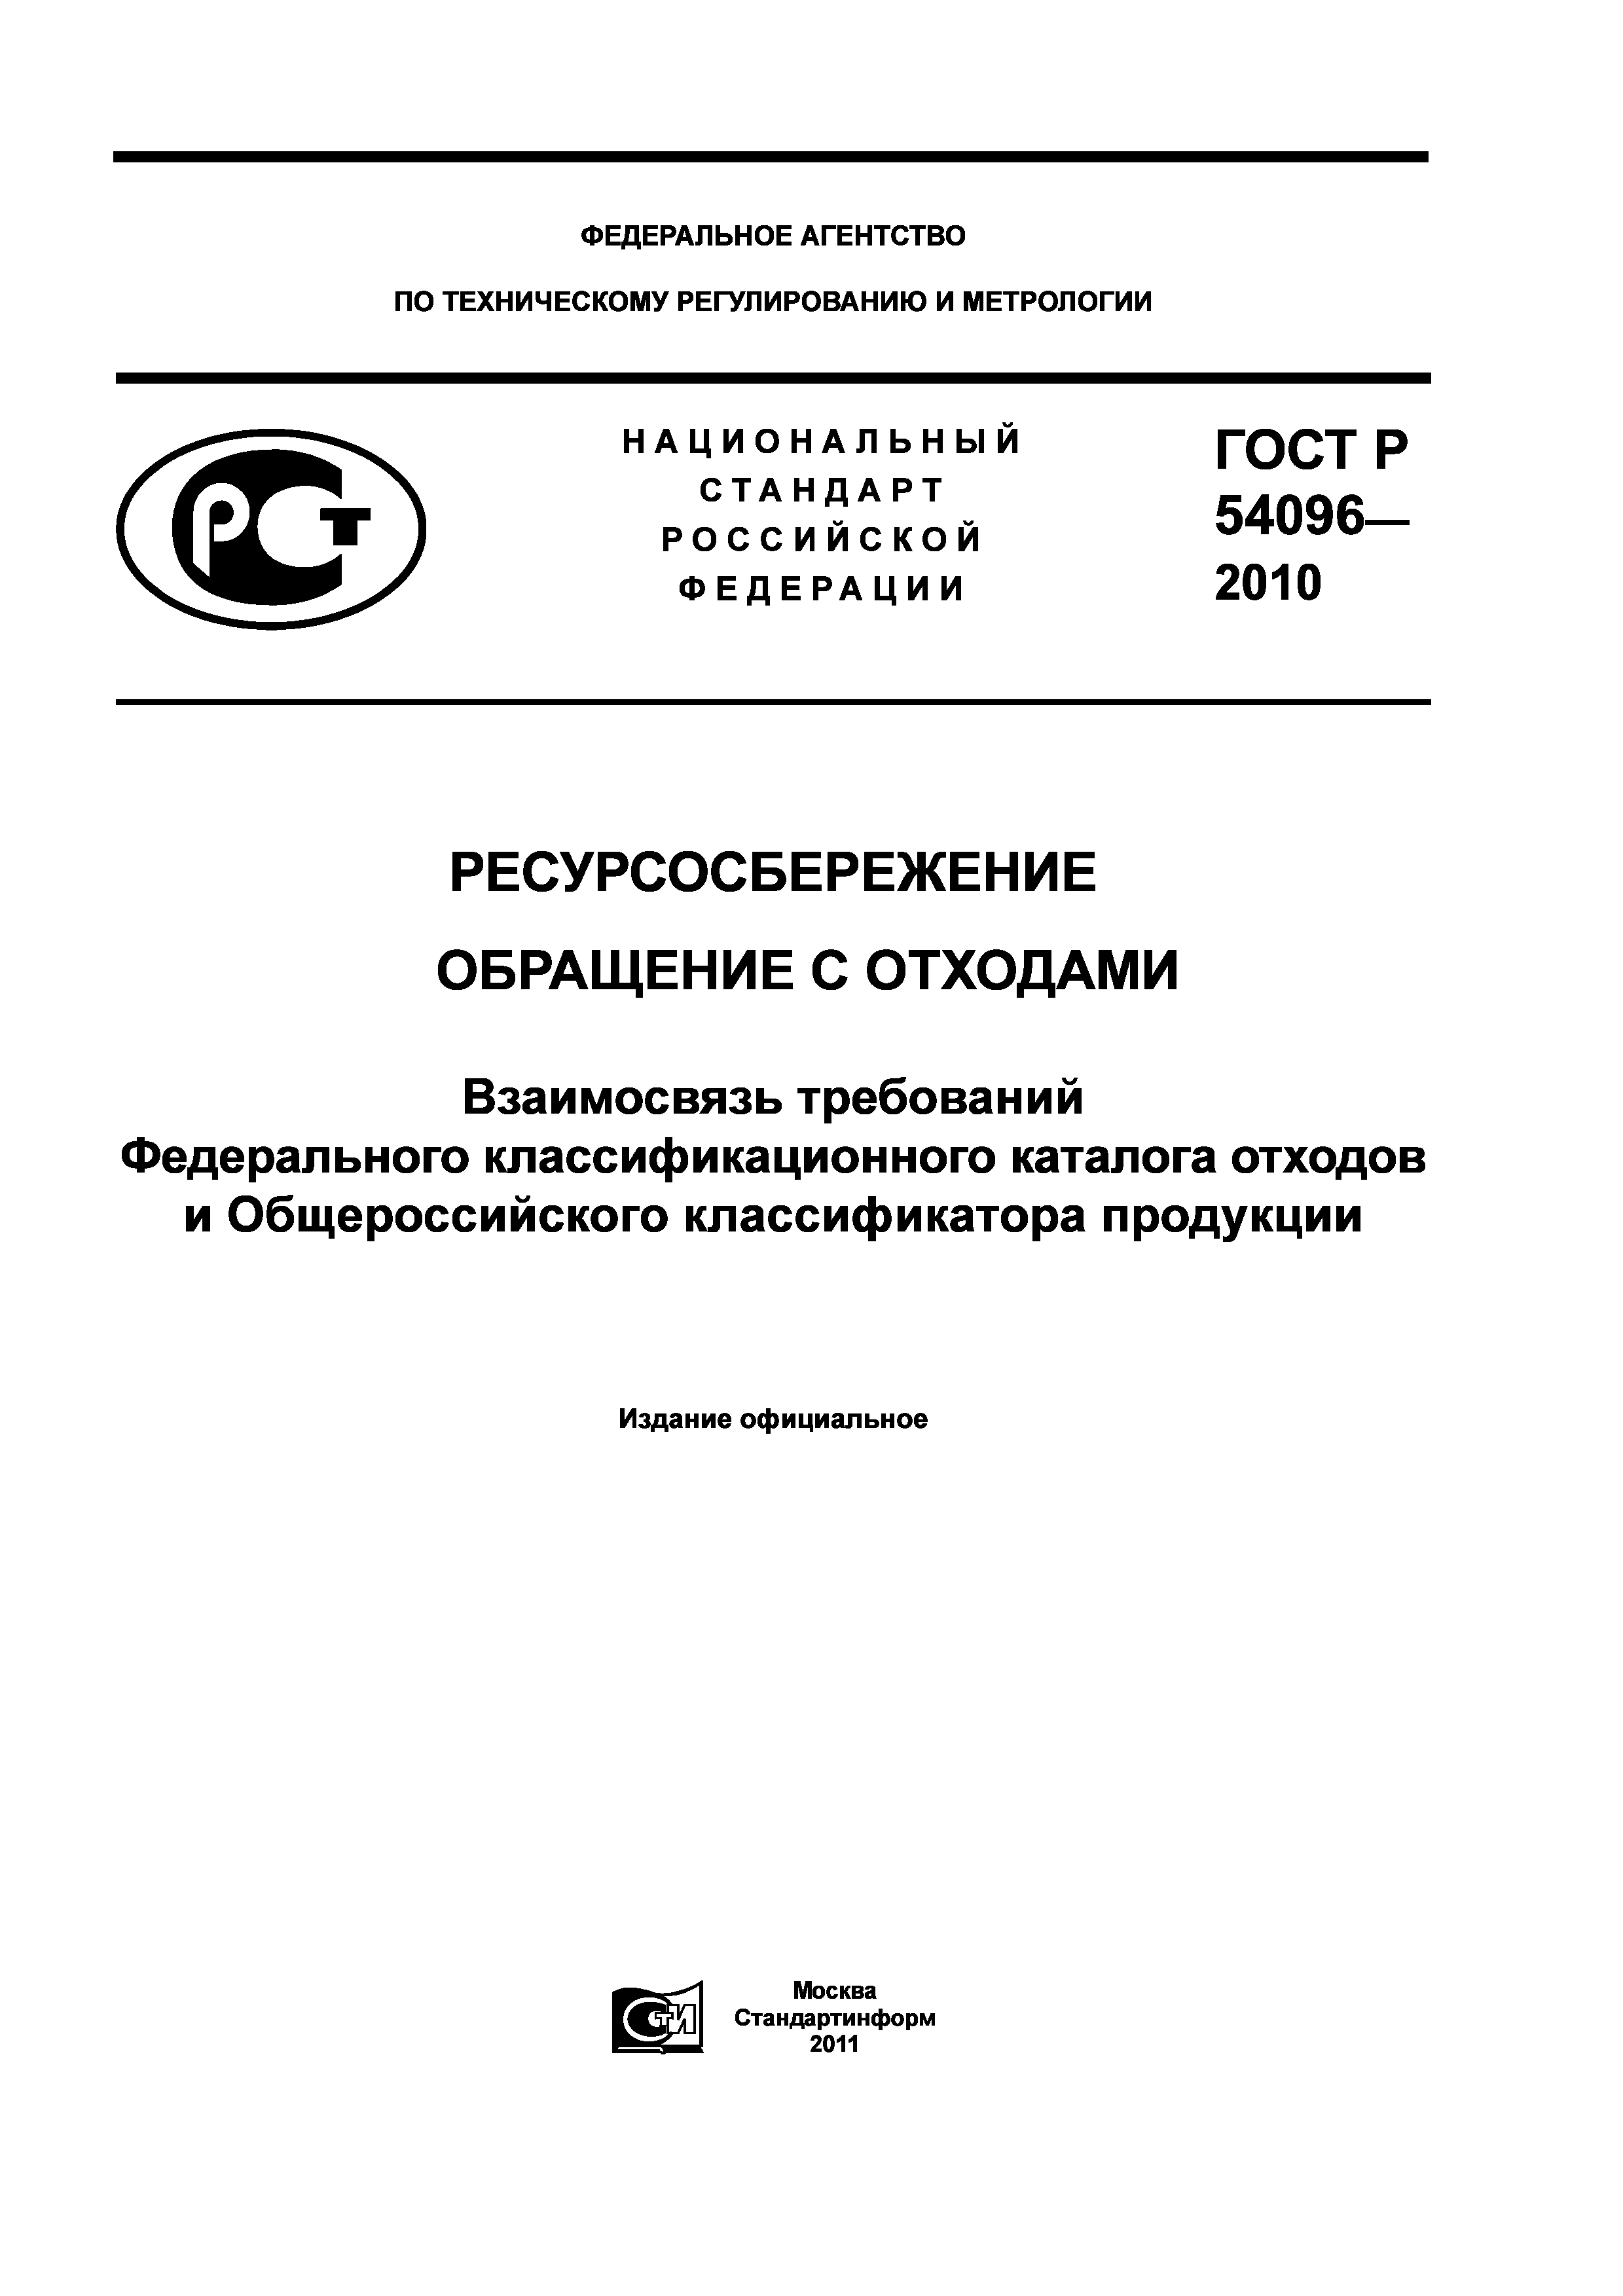 ГОСТ Р 54096-2010